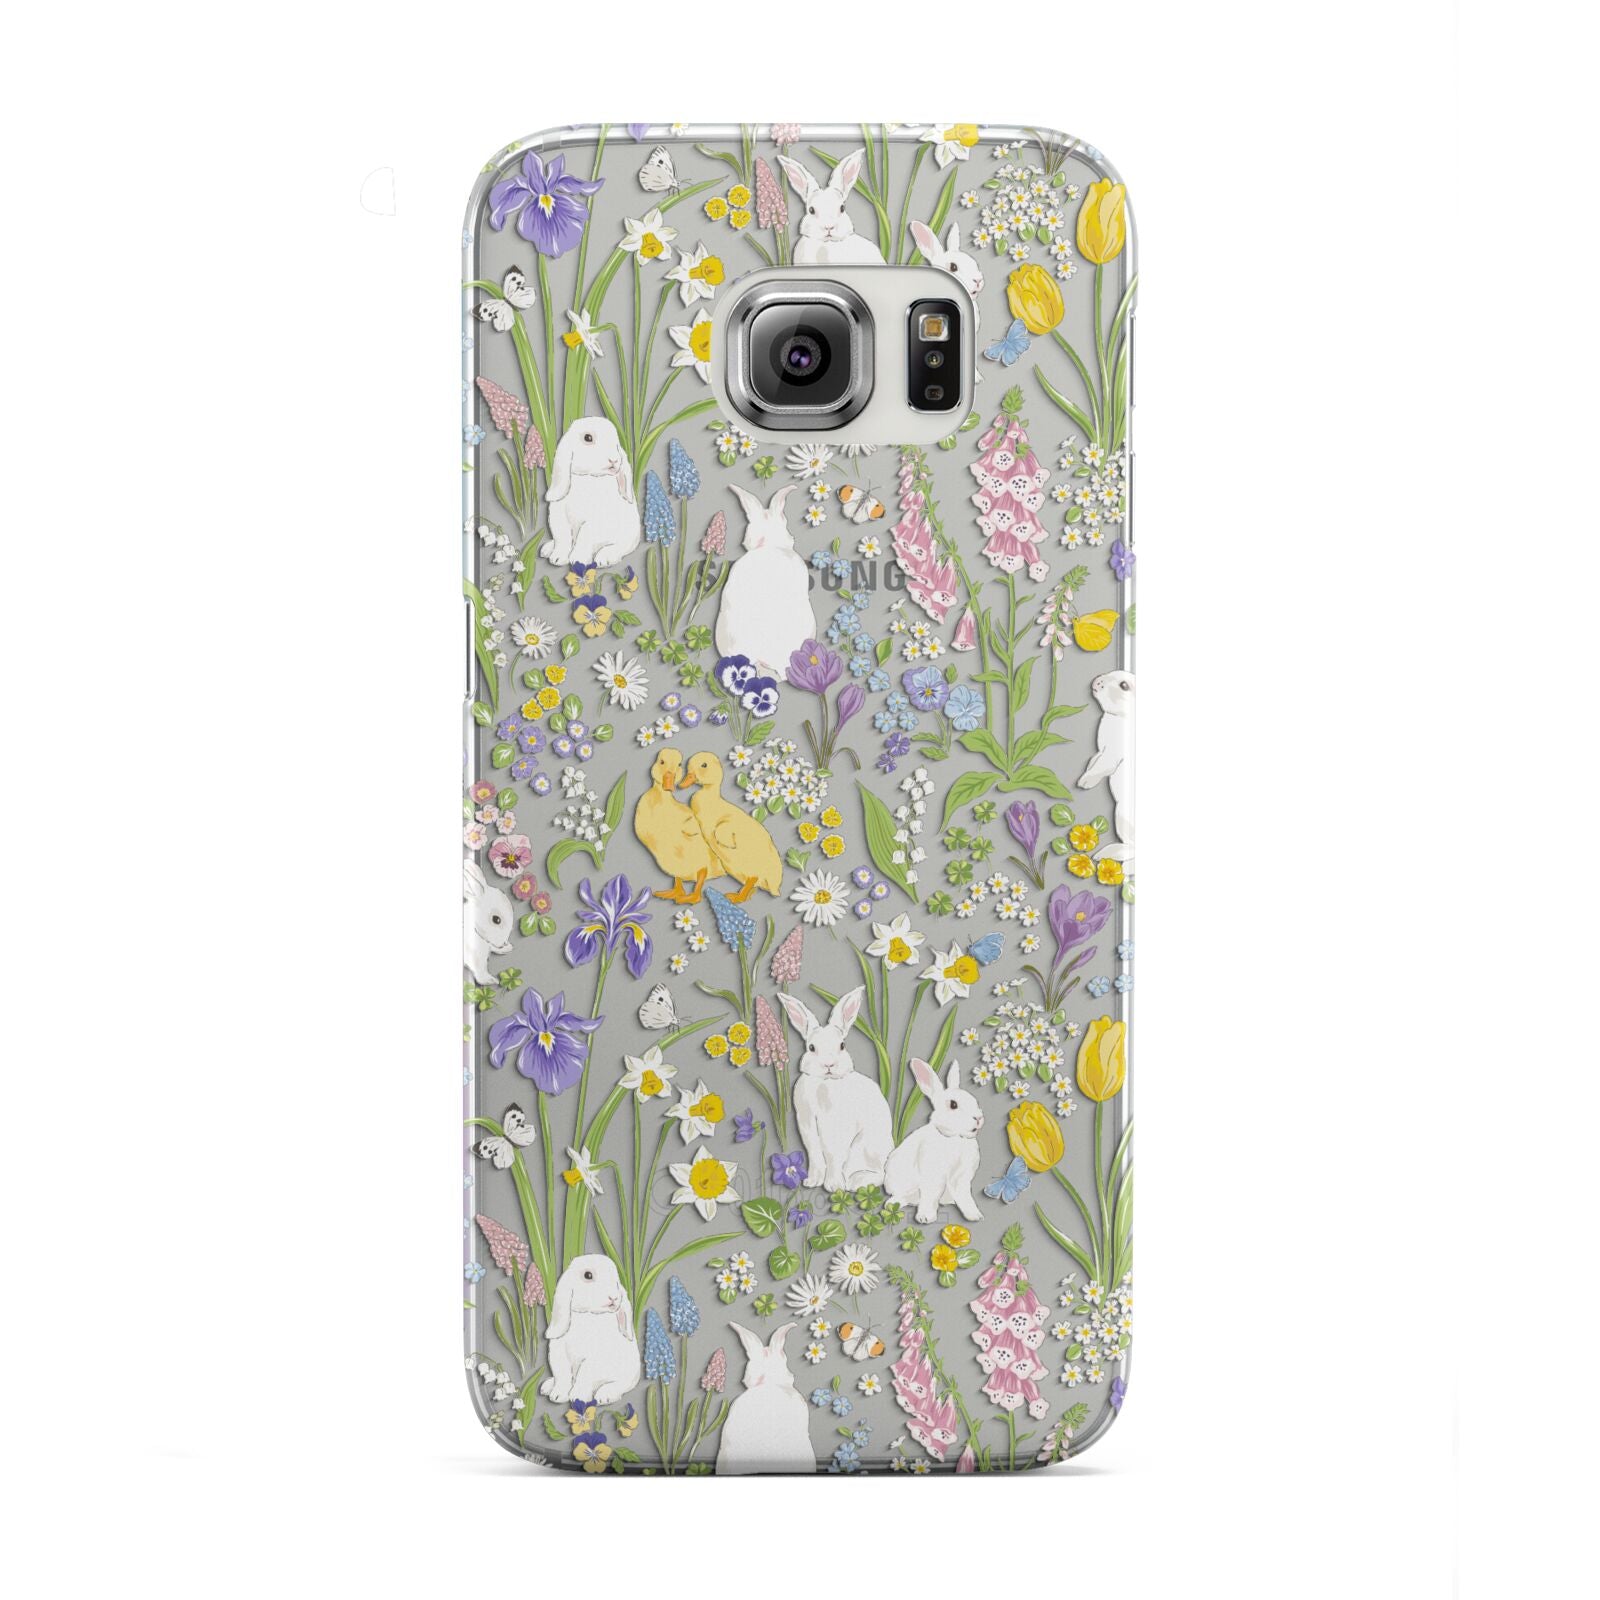 Easter Samsung Galaxy S6 Edge Case